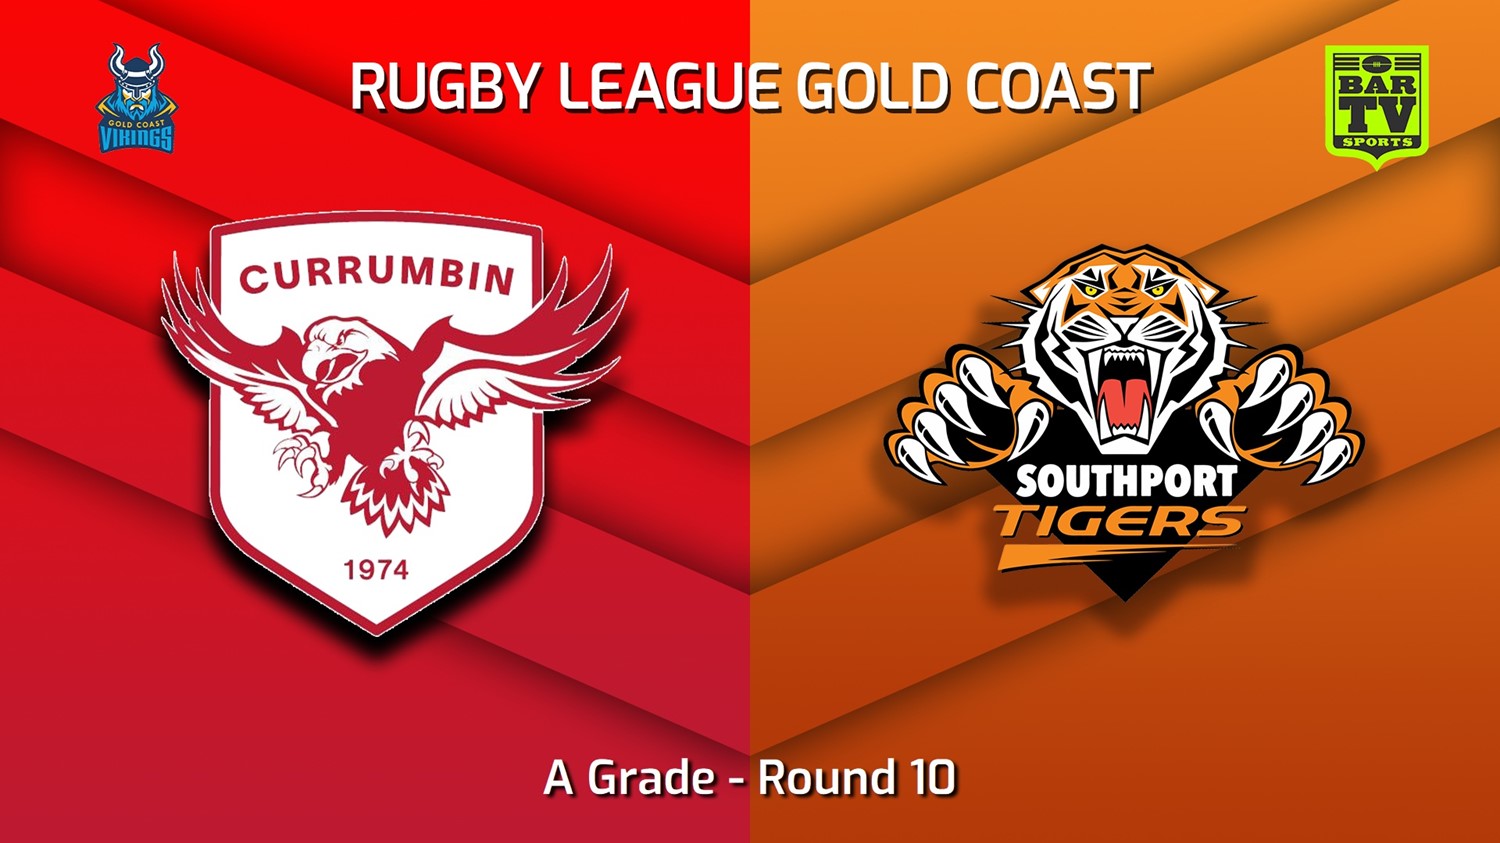 230702-Gold Coast Round 10 - A Grade - Currumbin Eagles v Southport Tigers Minigame Slate Image